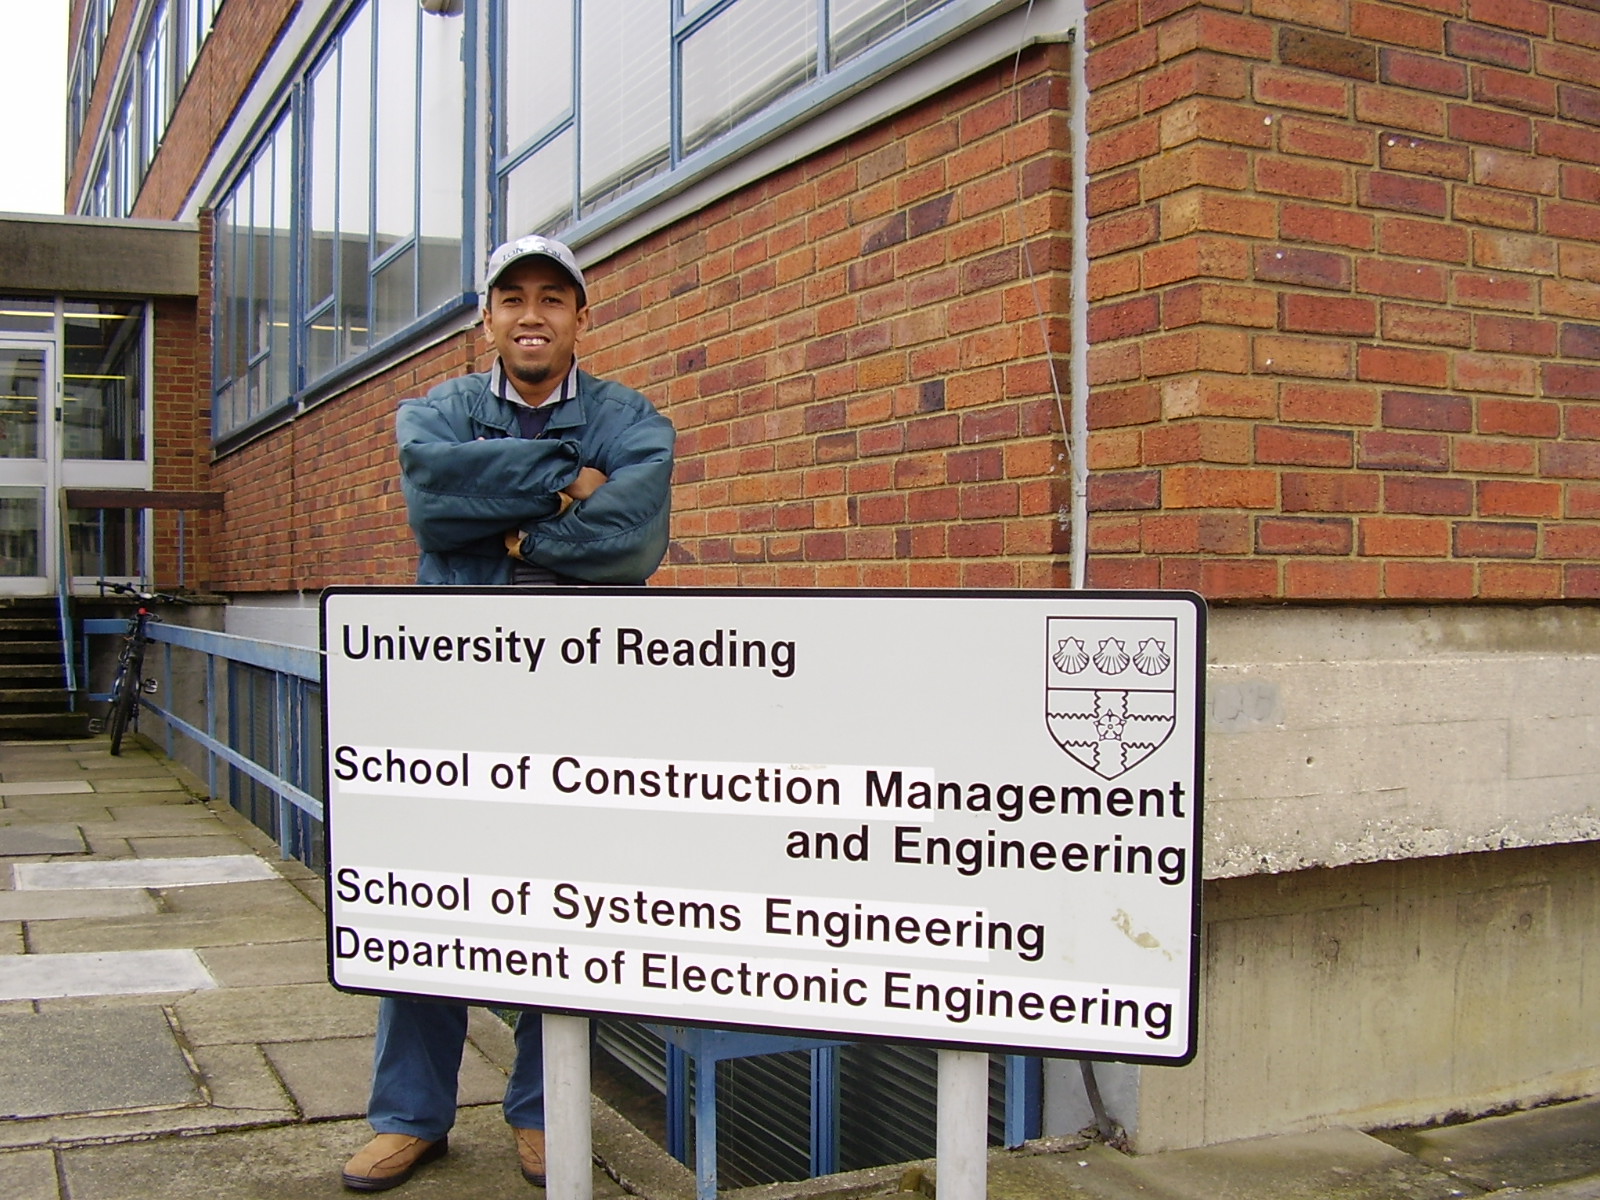 University of Reading, London 2008